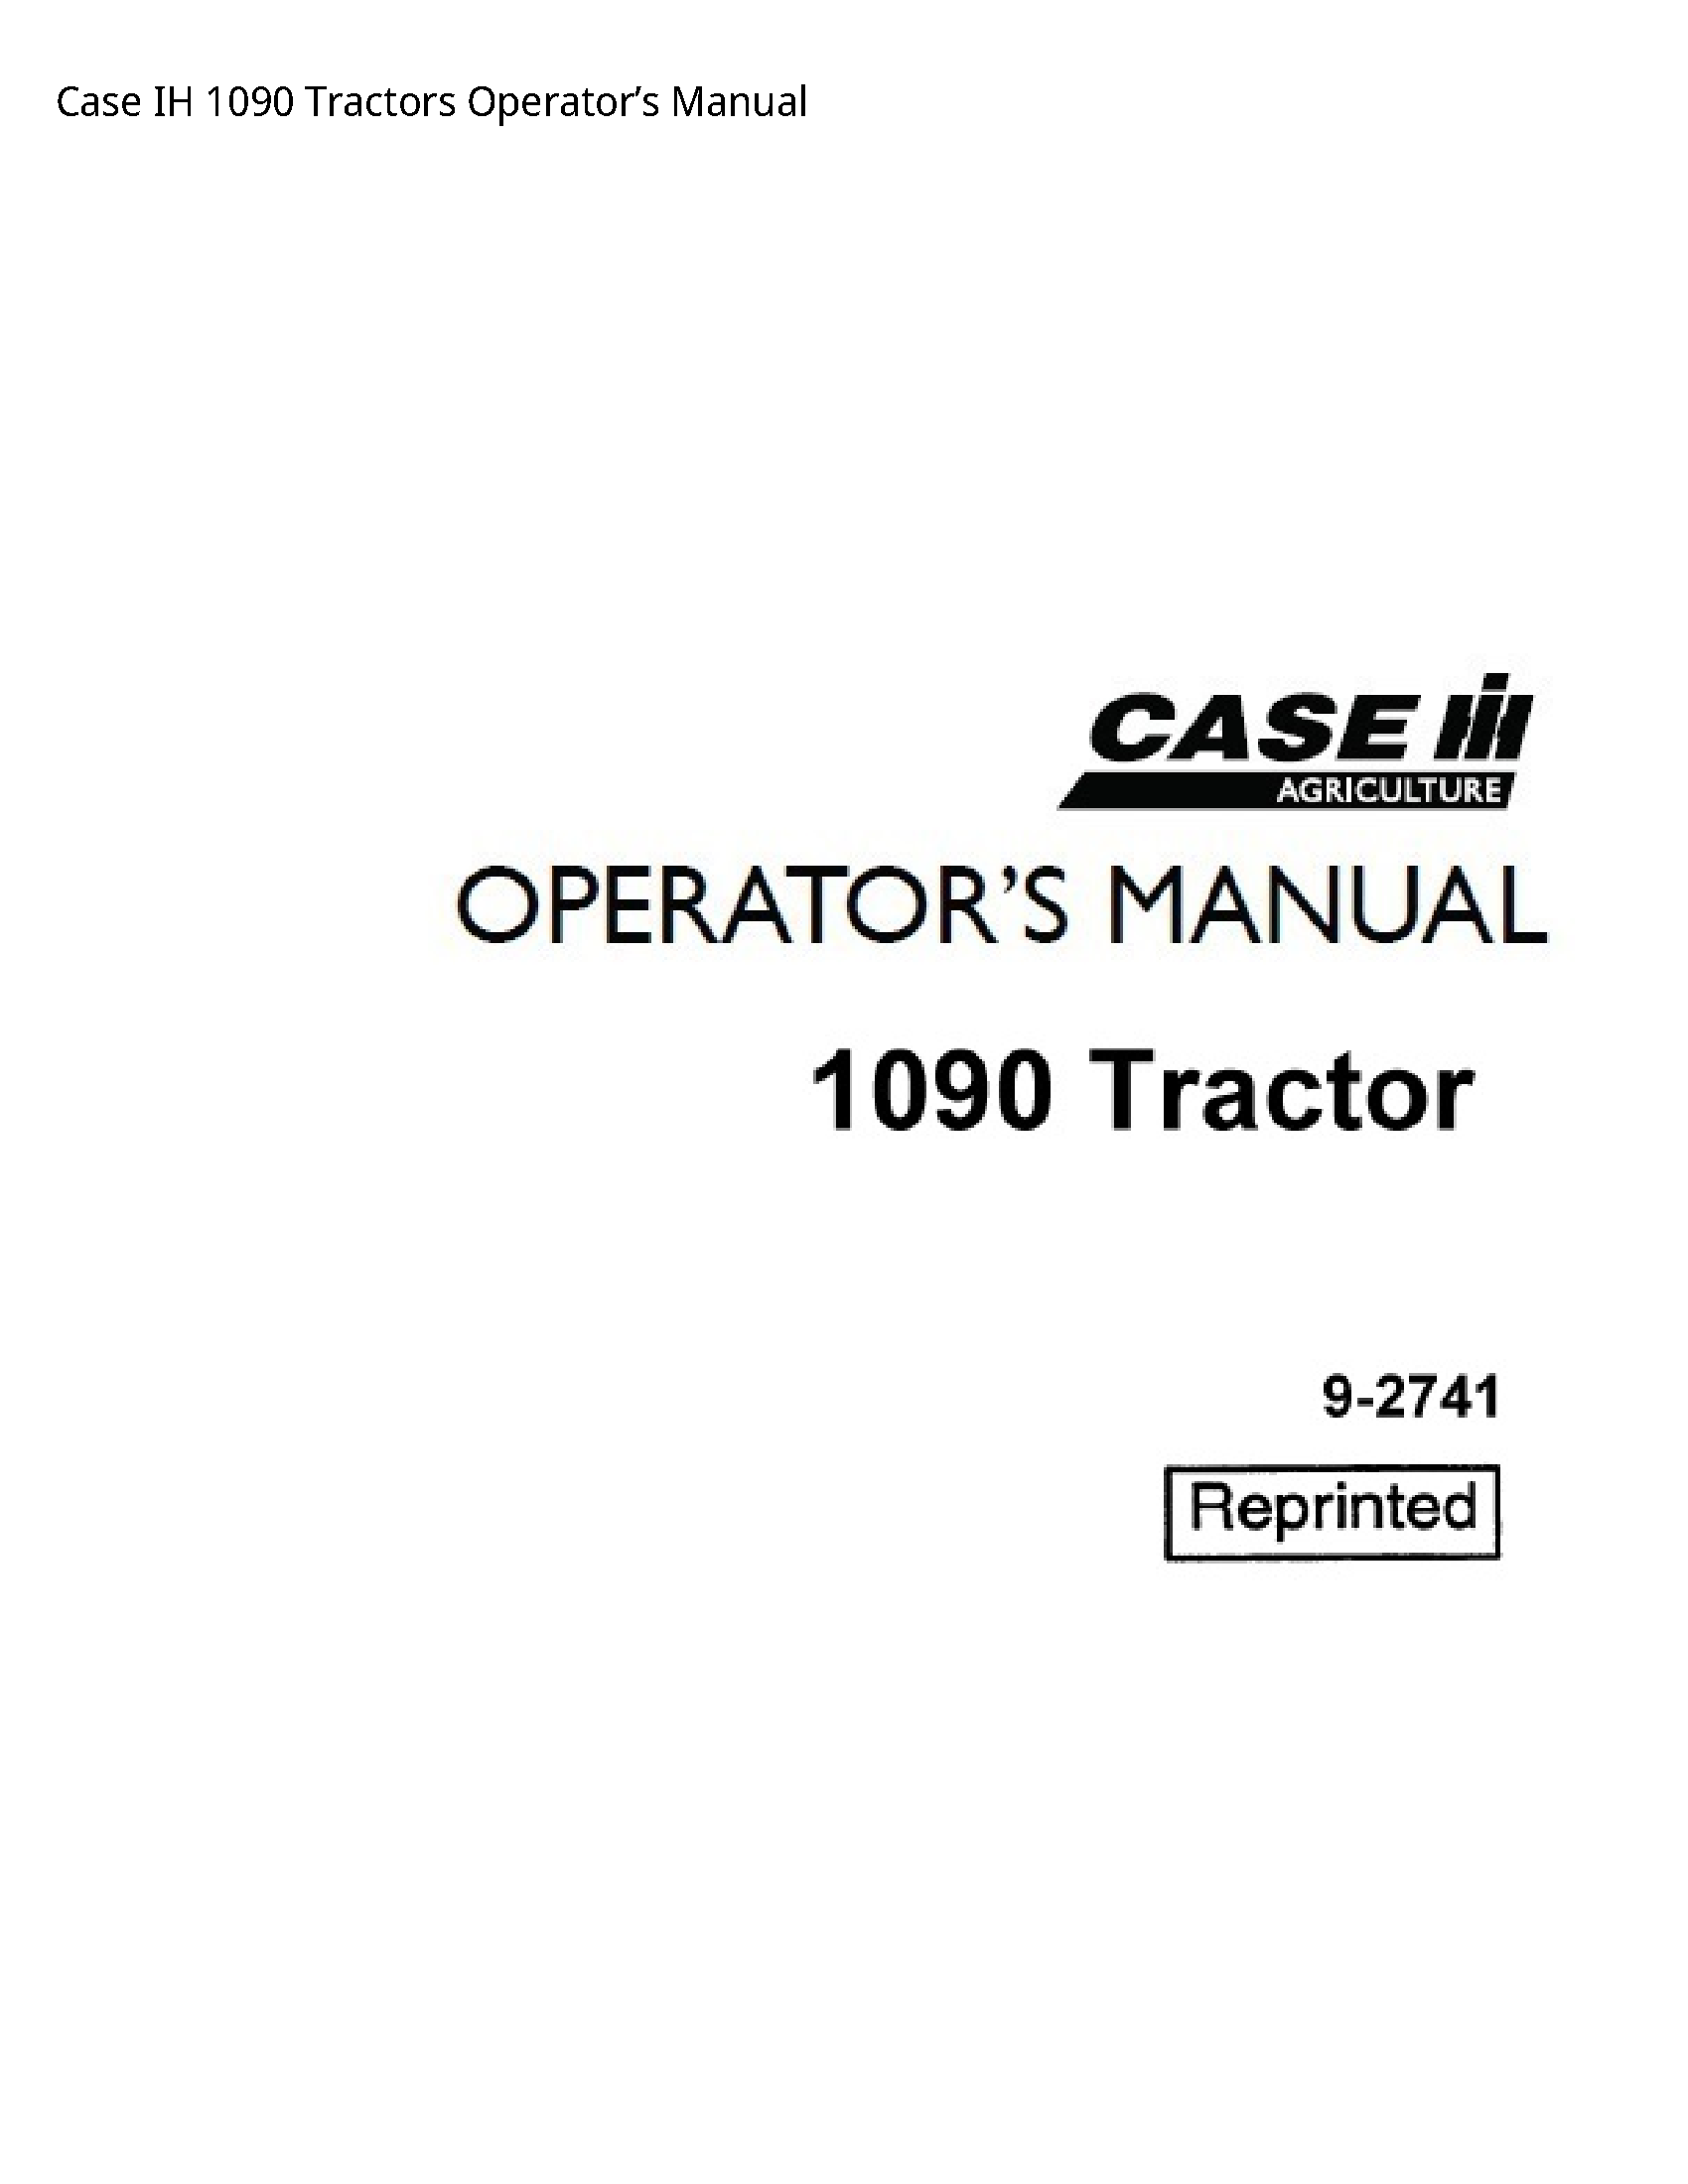 Case/Case IH 1090 IH Tractors Operator’s manual